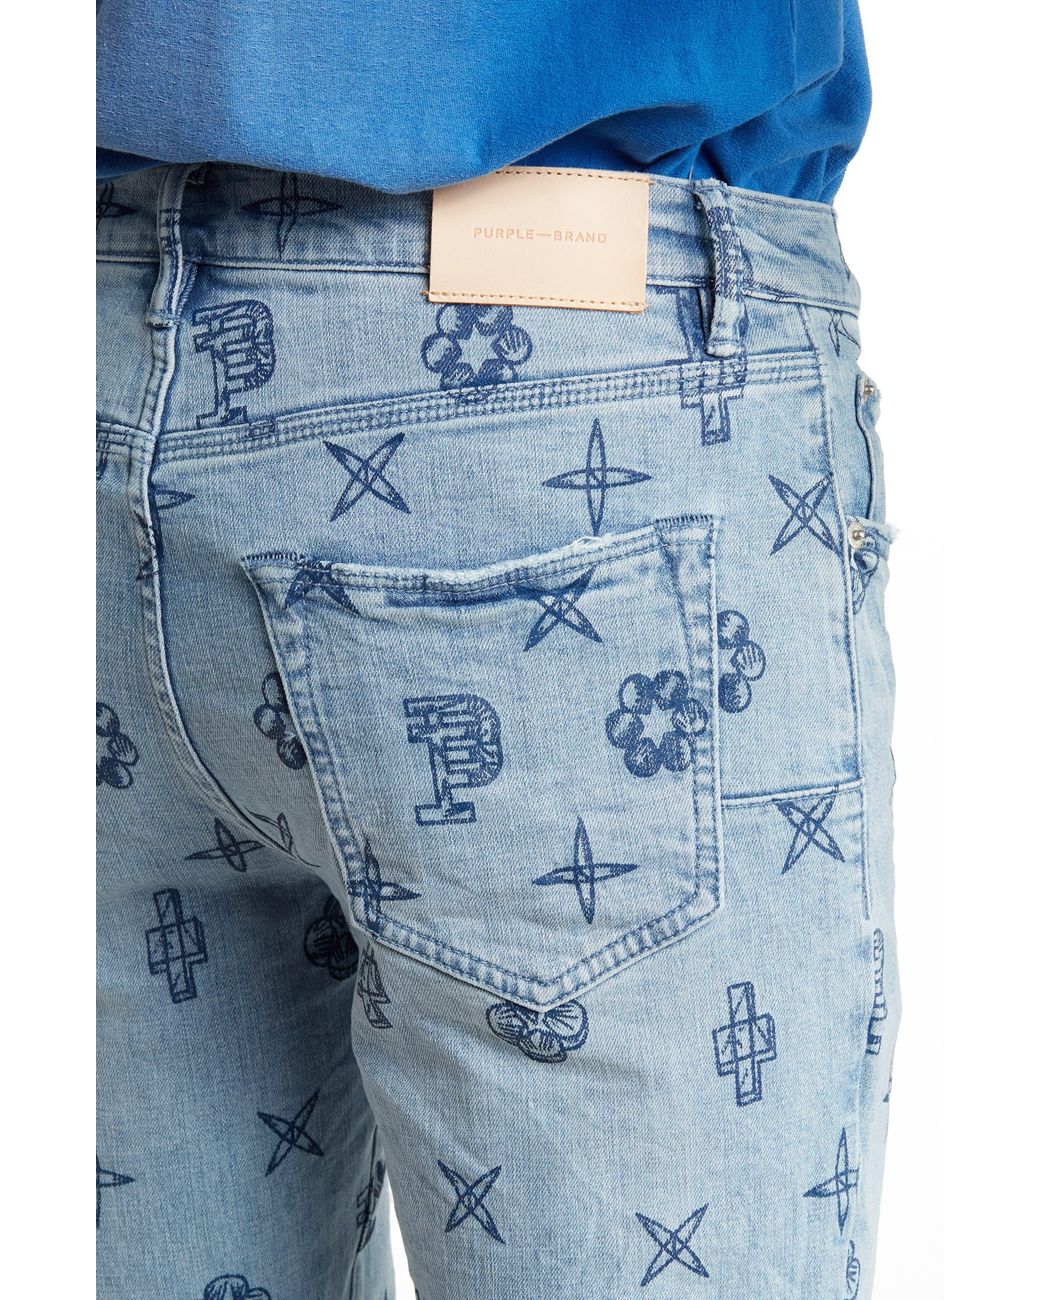 PURPLE BRAND Light Indigo Embroidered P Print Skinny Fit Blue Jean - Mens  from PILOT UK